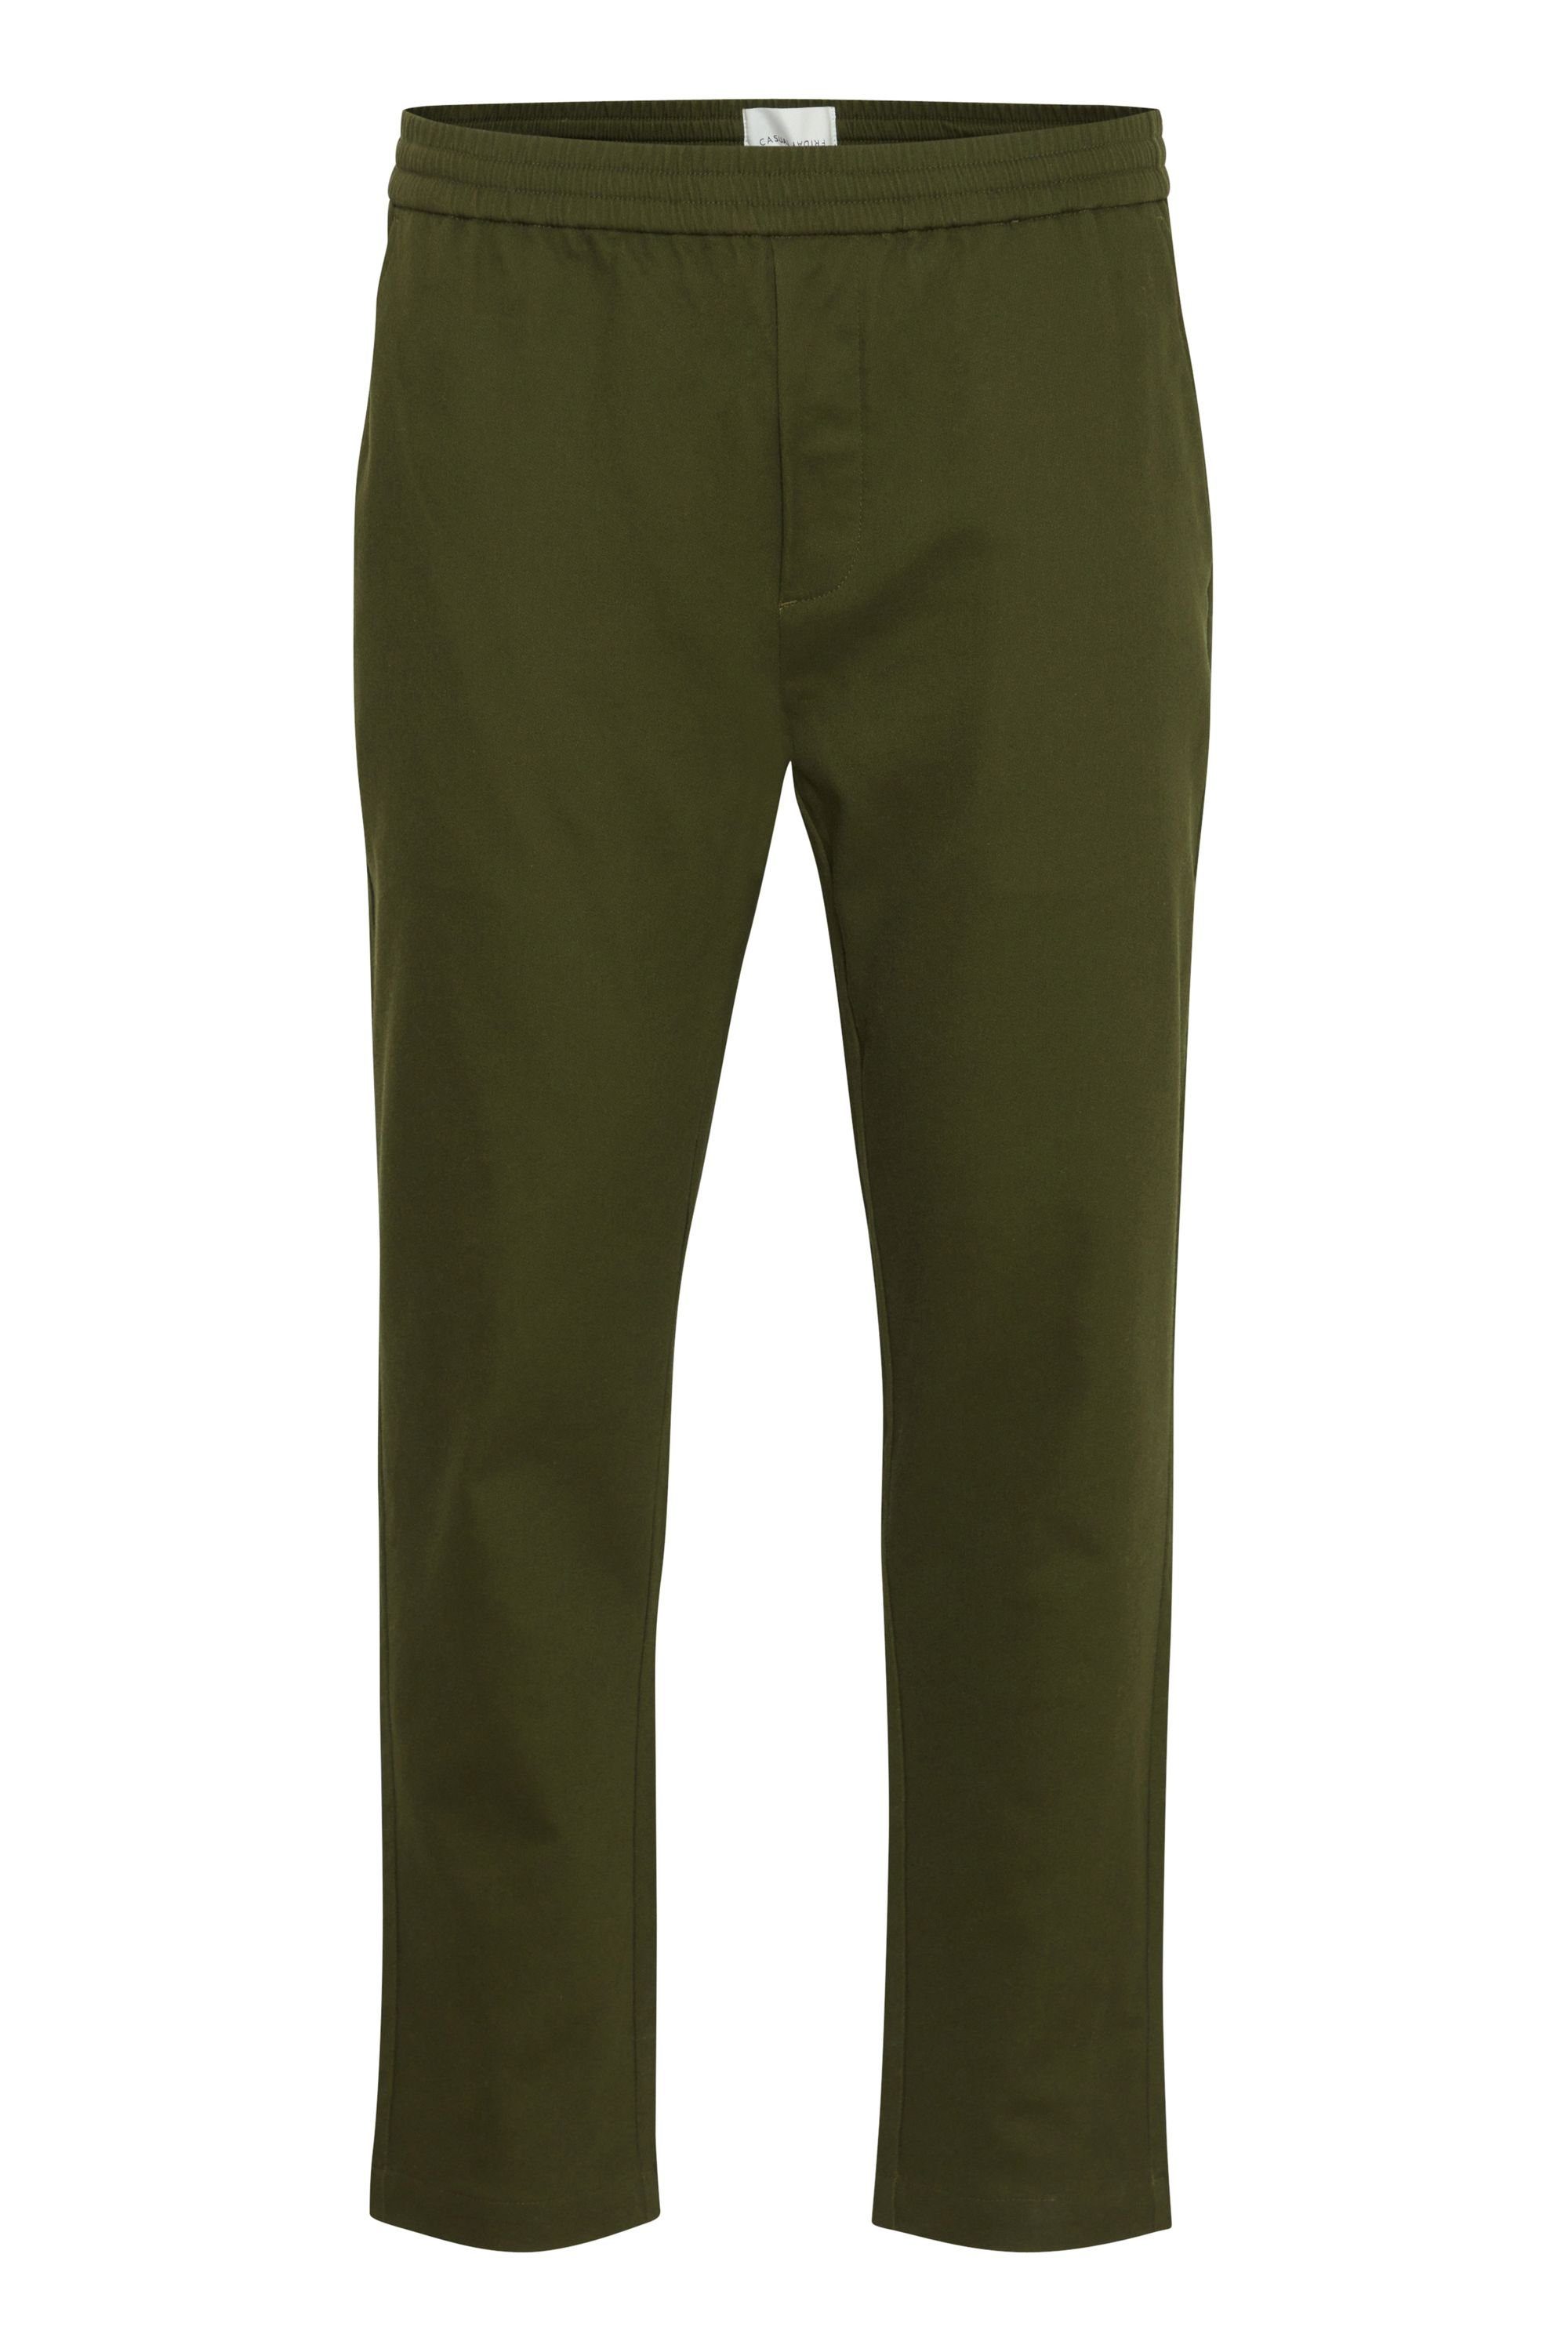 CFGus jersey Casual 20504819 pants Green 0091 (190419) Friday Stoffhose Rifle -